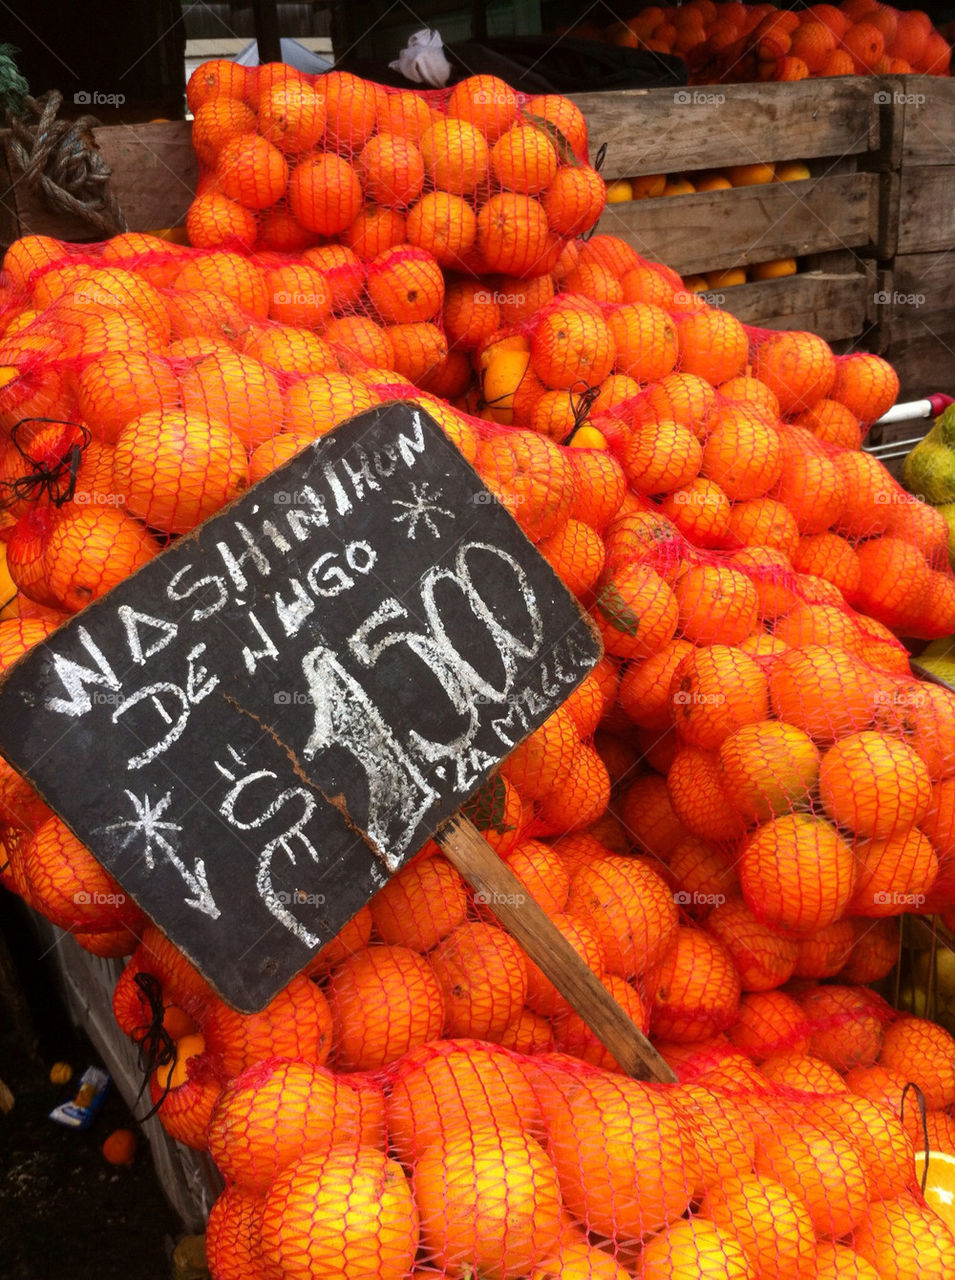 vega washington mercado naranjas by pipelio